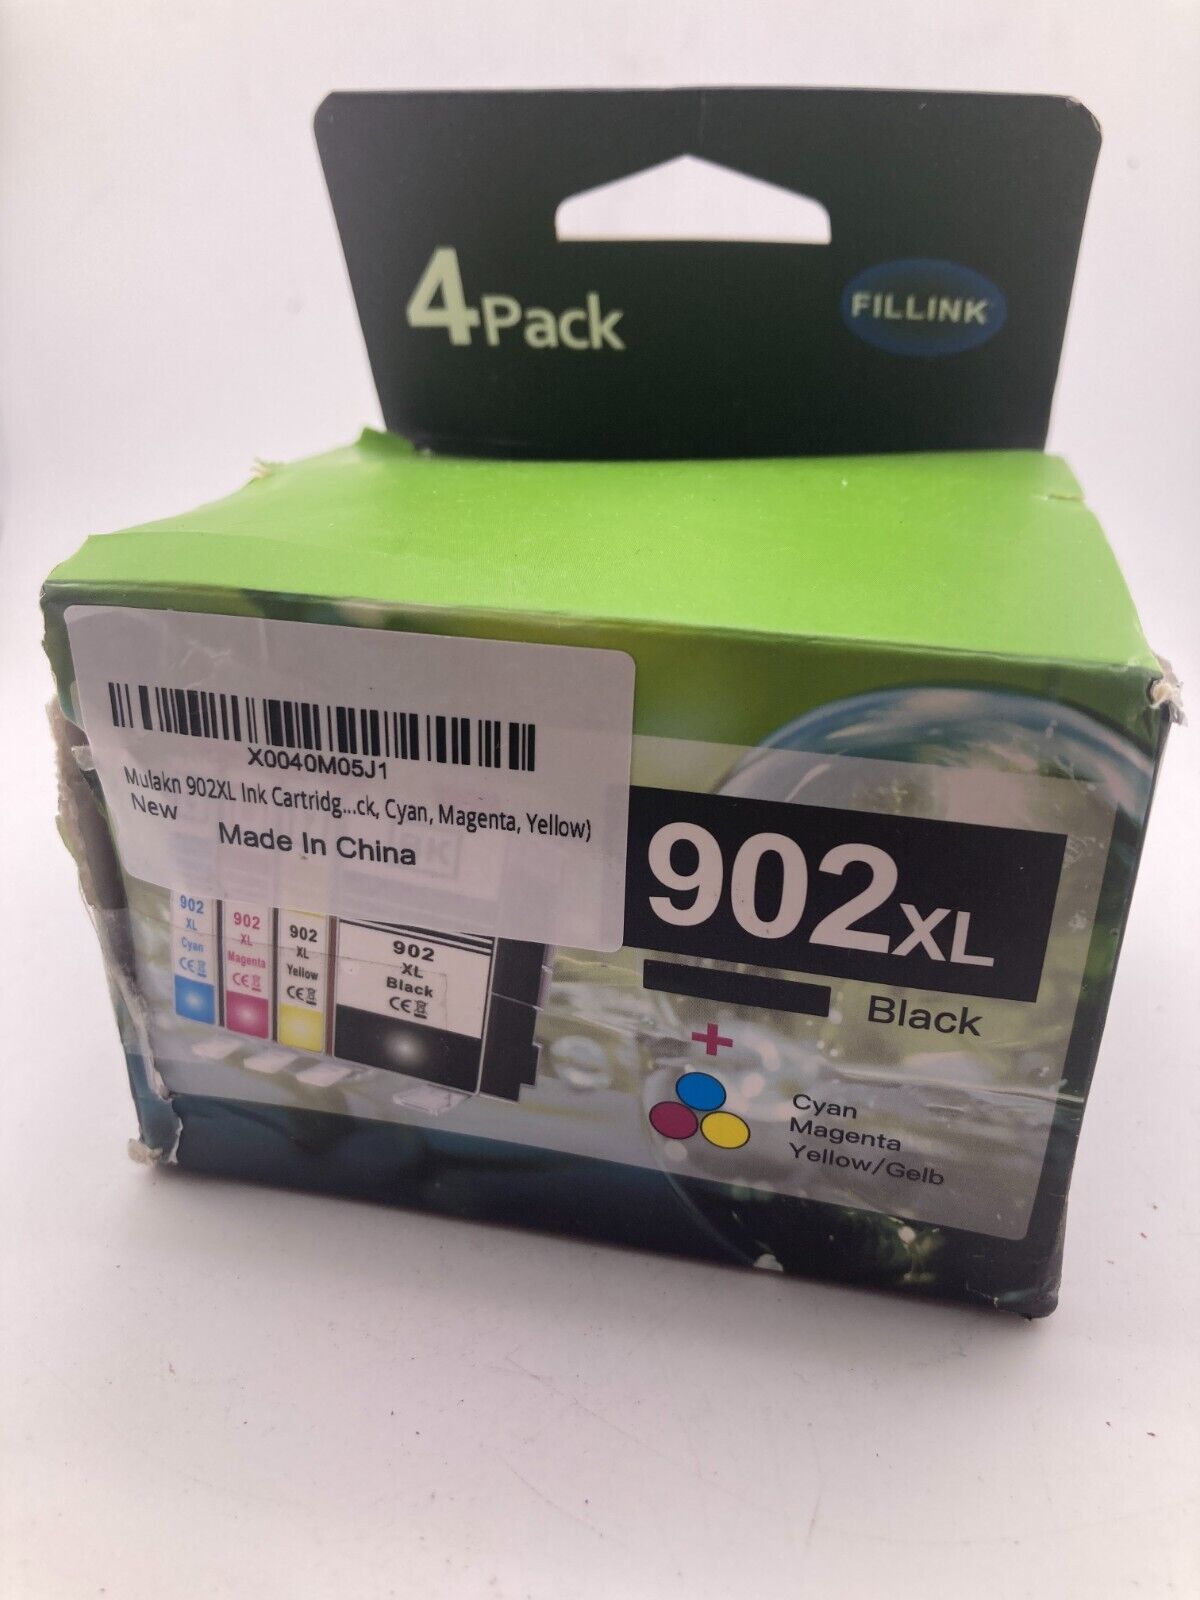 4-Pack 902XL Fits HP Three Colors Plus Black in Original Box GPC Image Toner